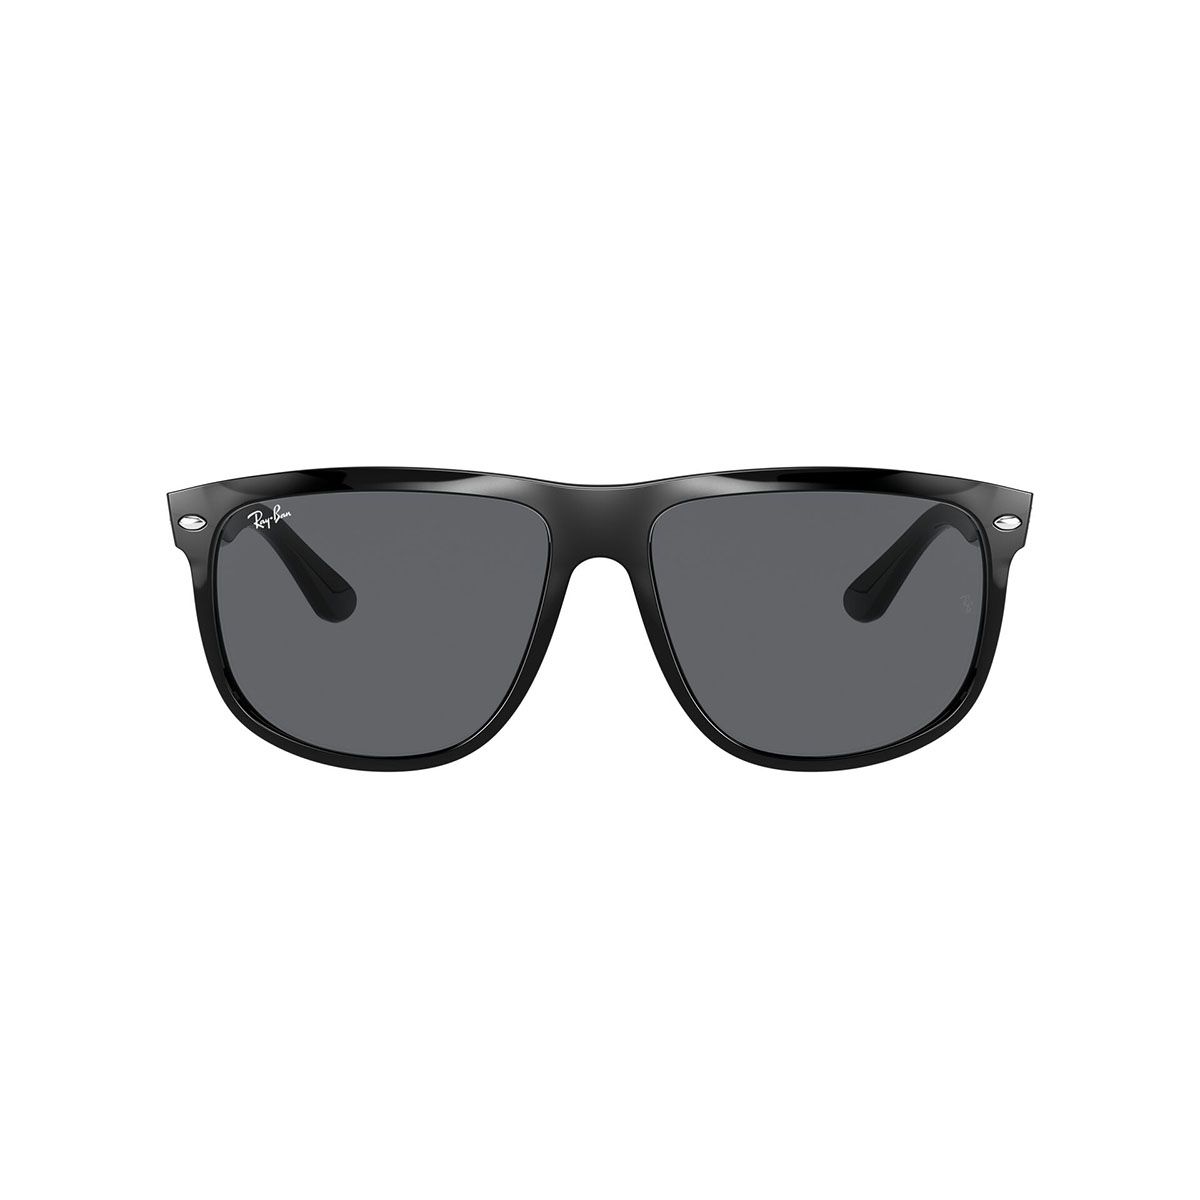 RB4147  - Sunglasses 601 87 - size 60